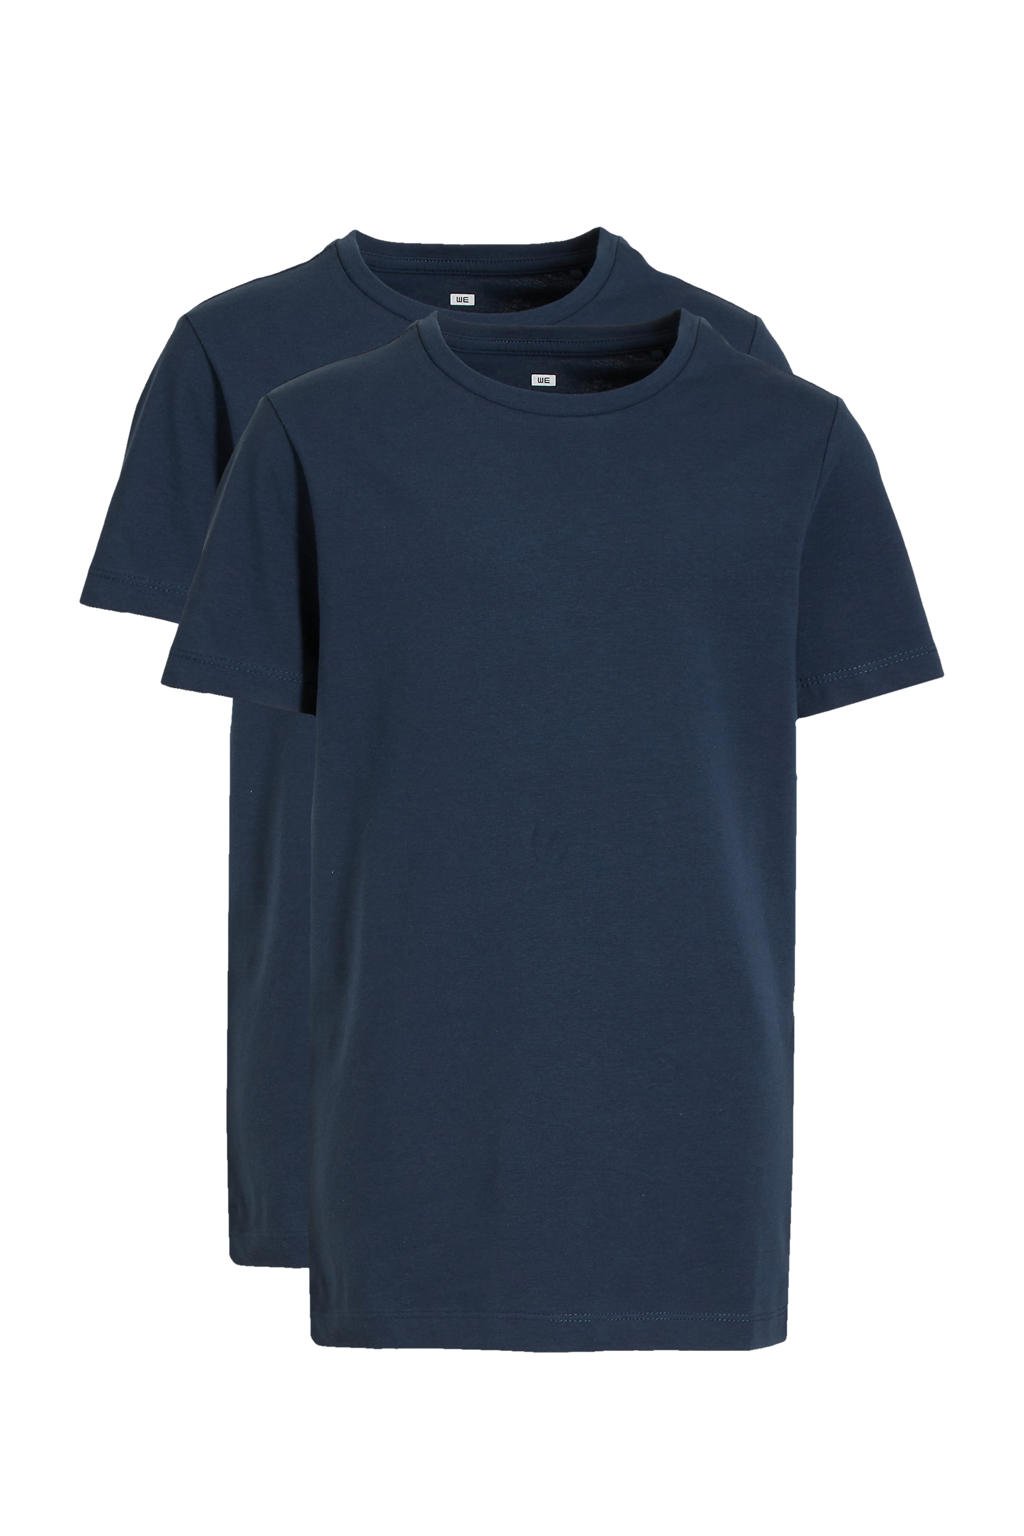 WE Fashion T-shirt - set van 2 donkerblauw